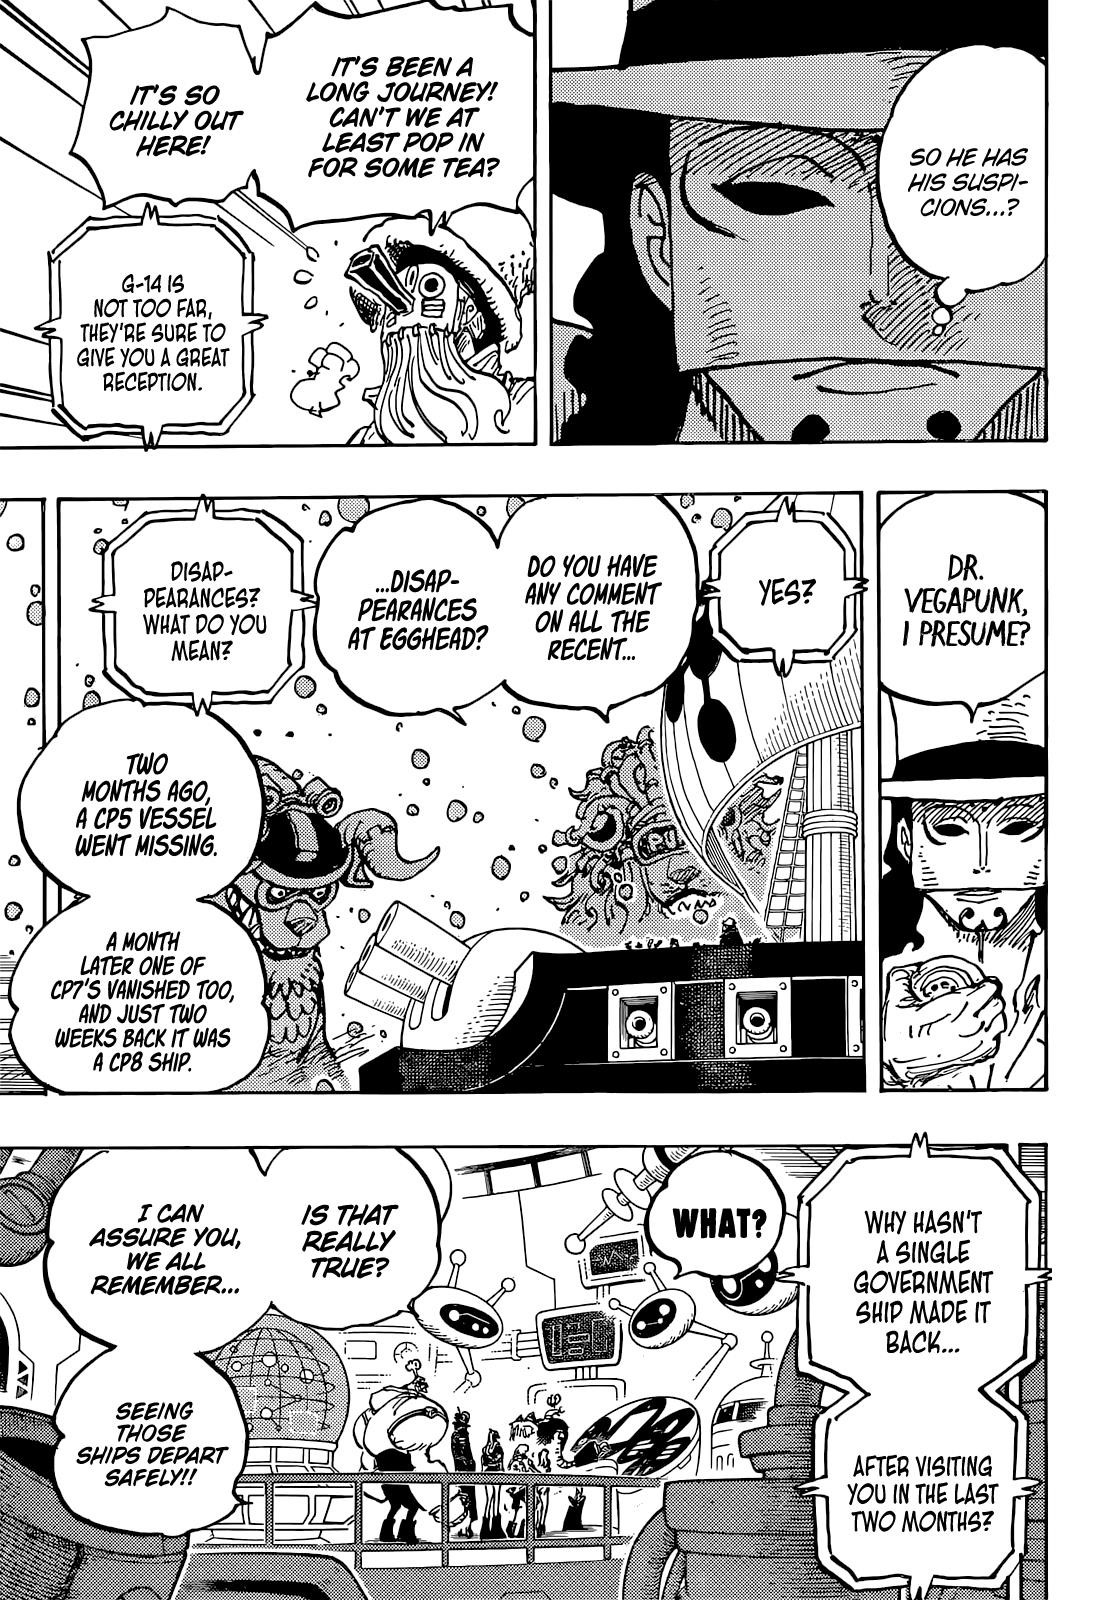 One Piece Chapter 1061 - Future Island Egghead - One Piece Manga Online